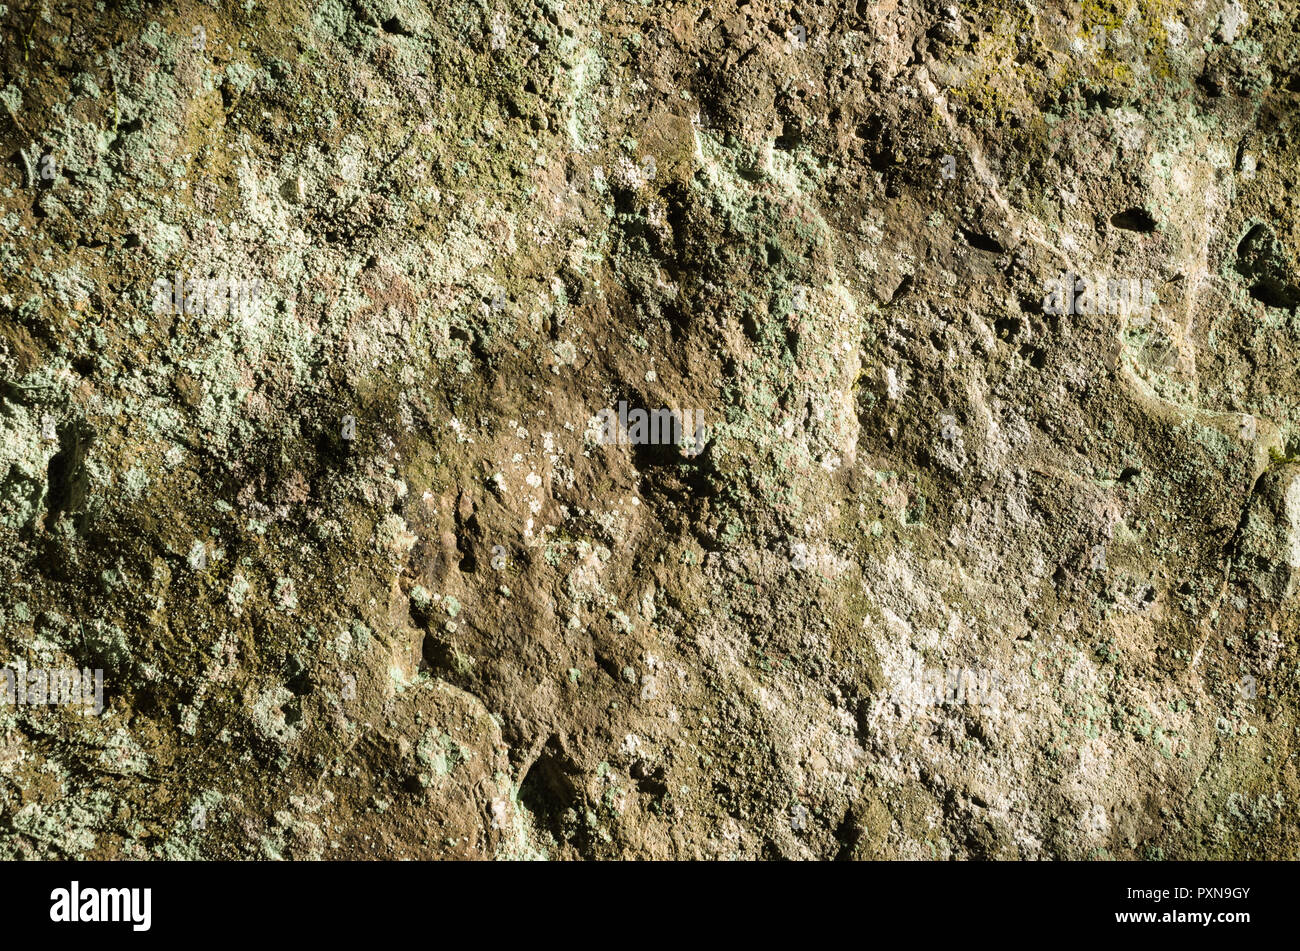 Flat rock superficie ricoperta da licheni. Foto Stock